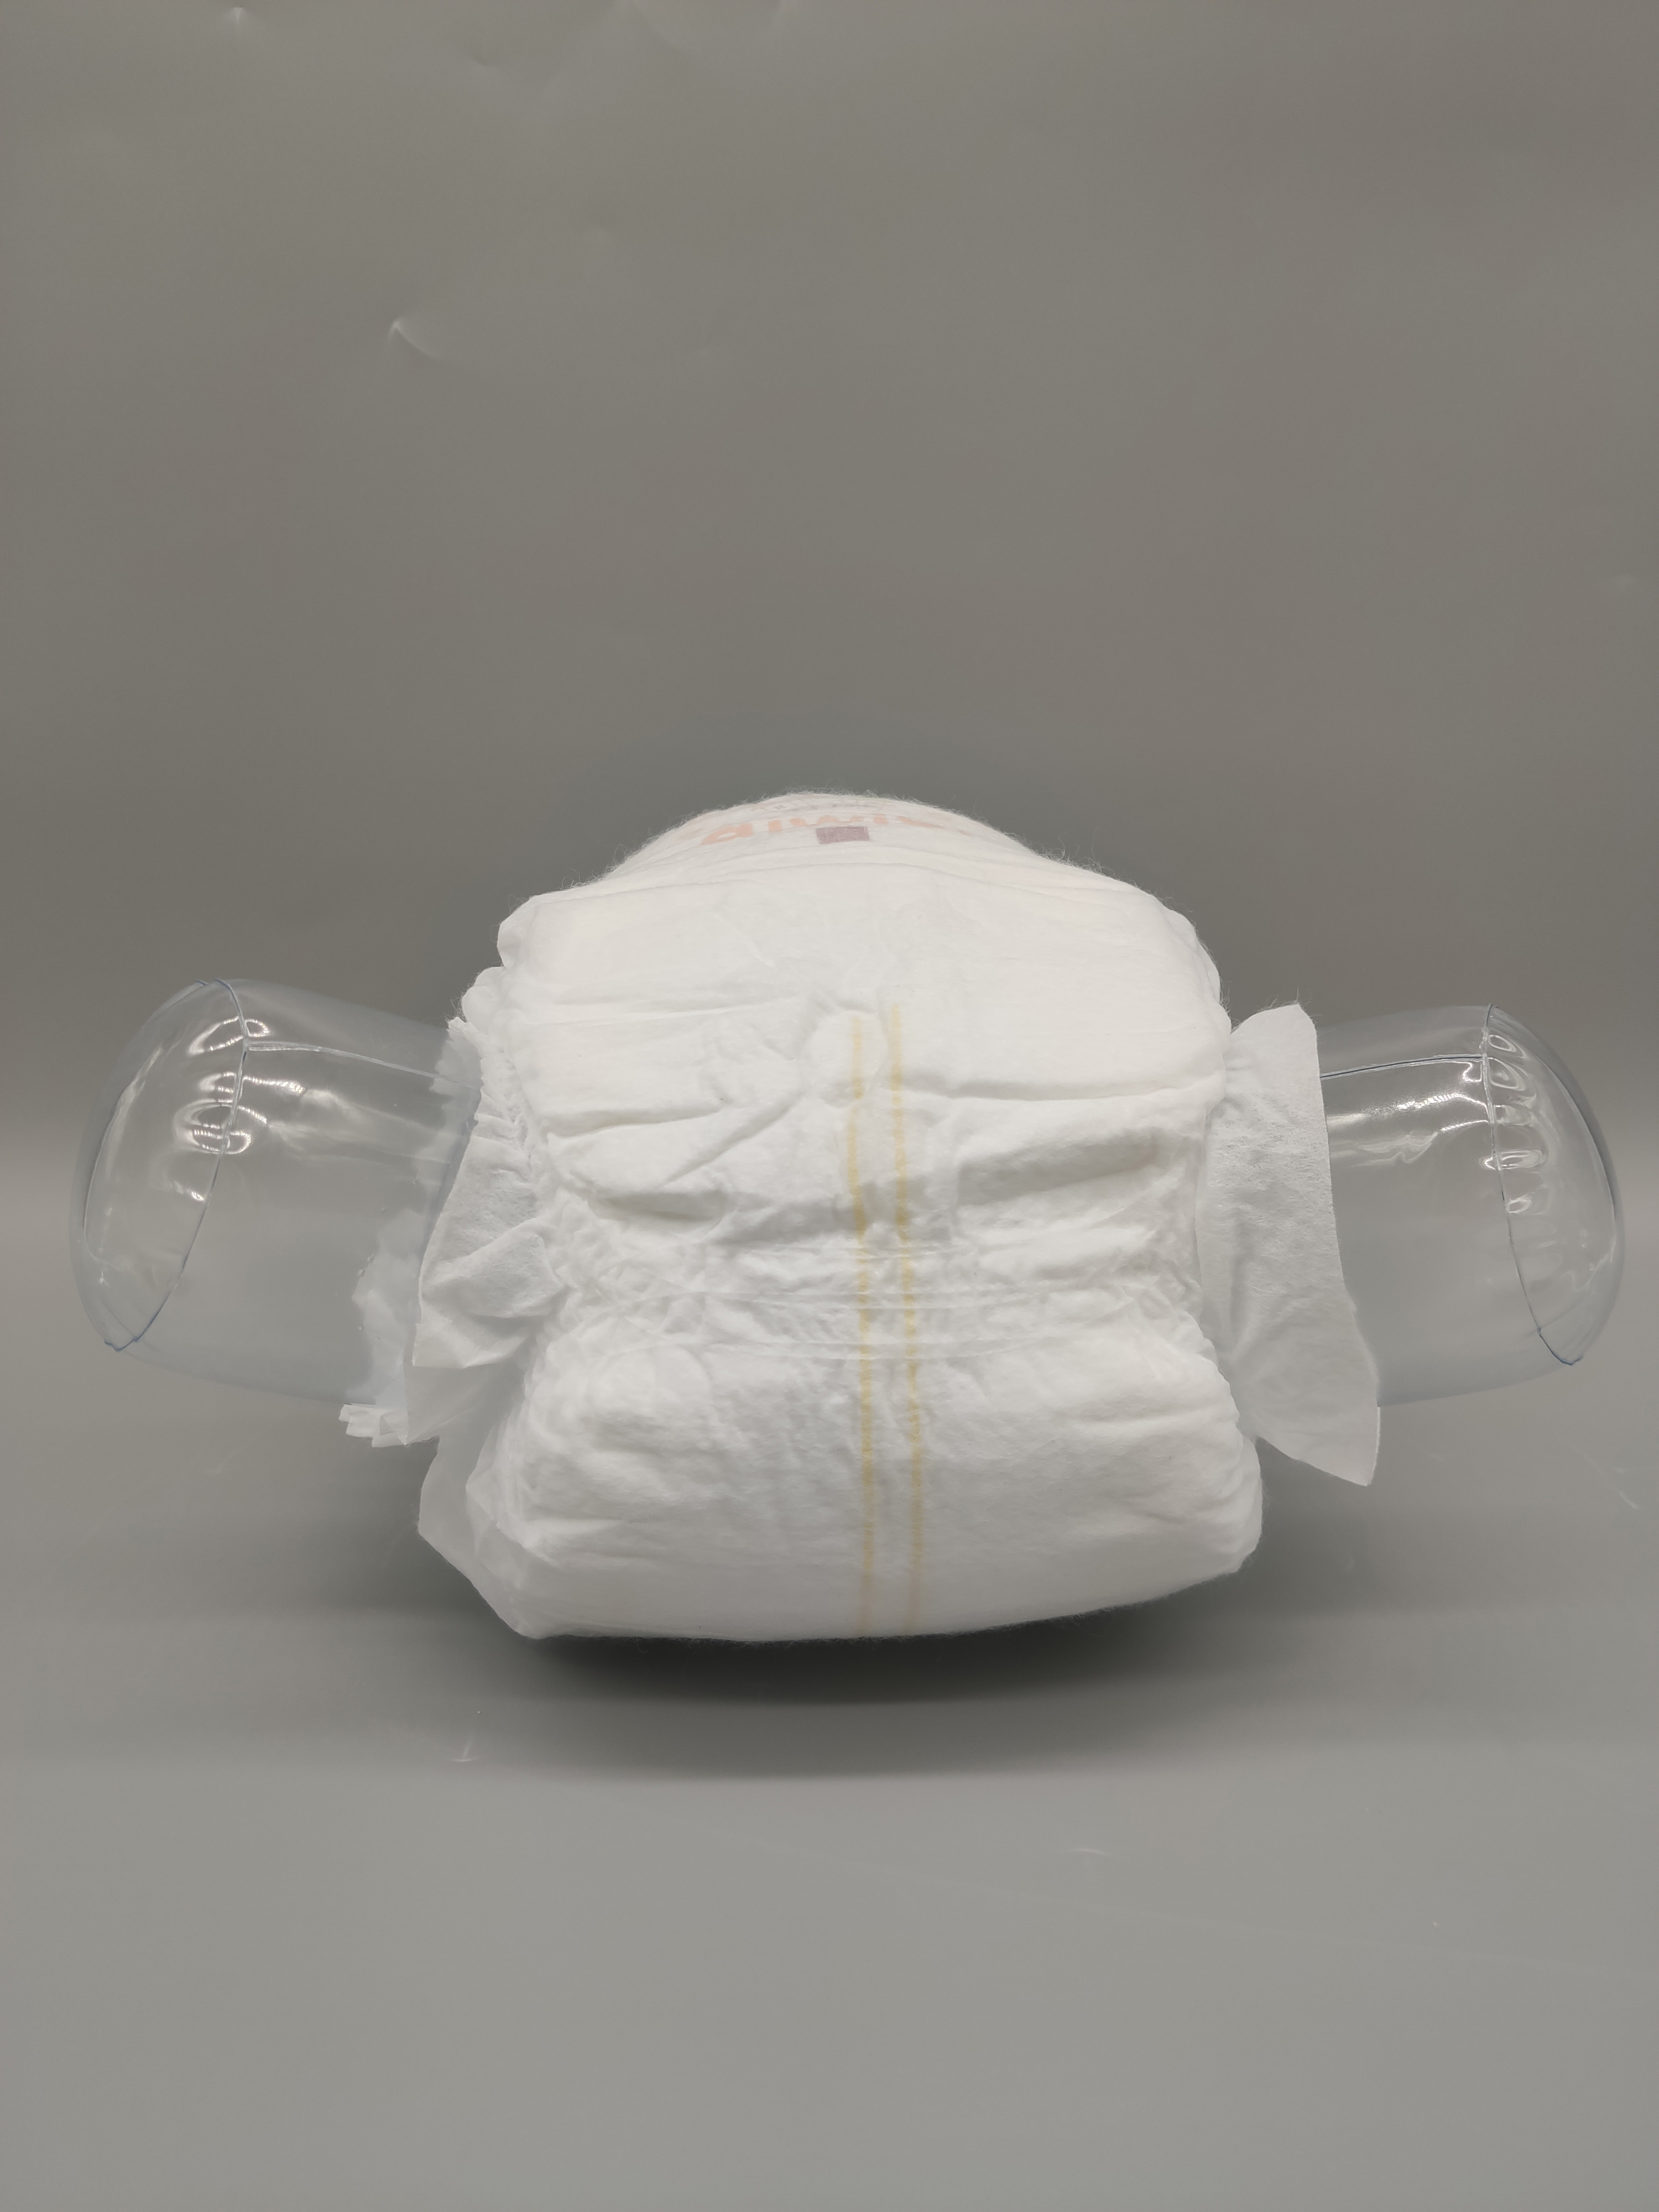 Aiwibi Baby Pants Производитель подгузников Ultra Thin Super Absorbency Абсолютное качество